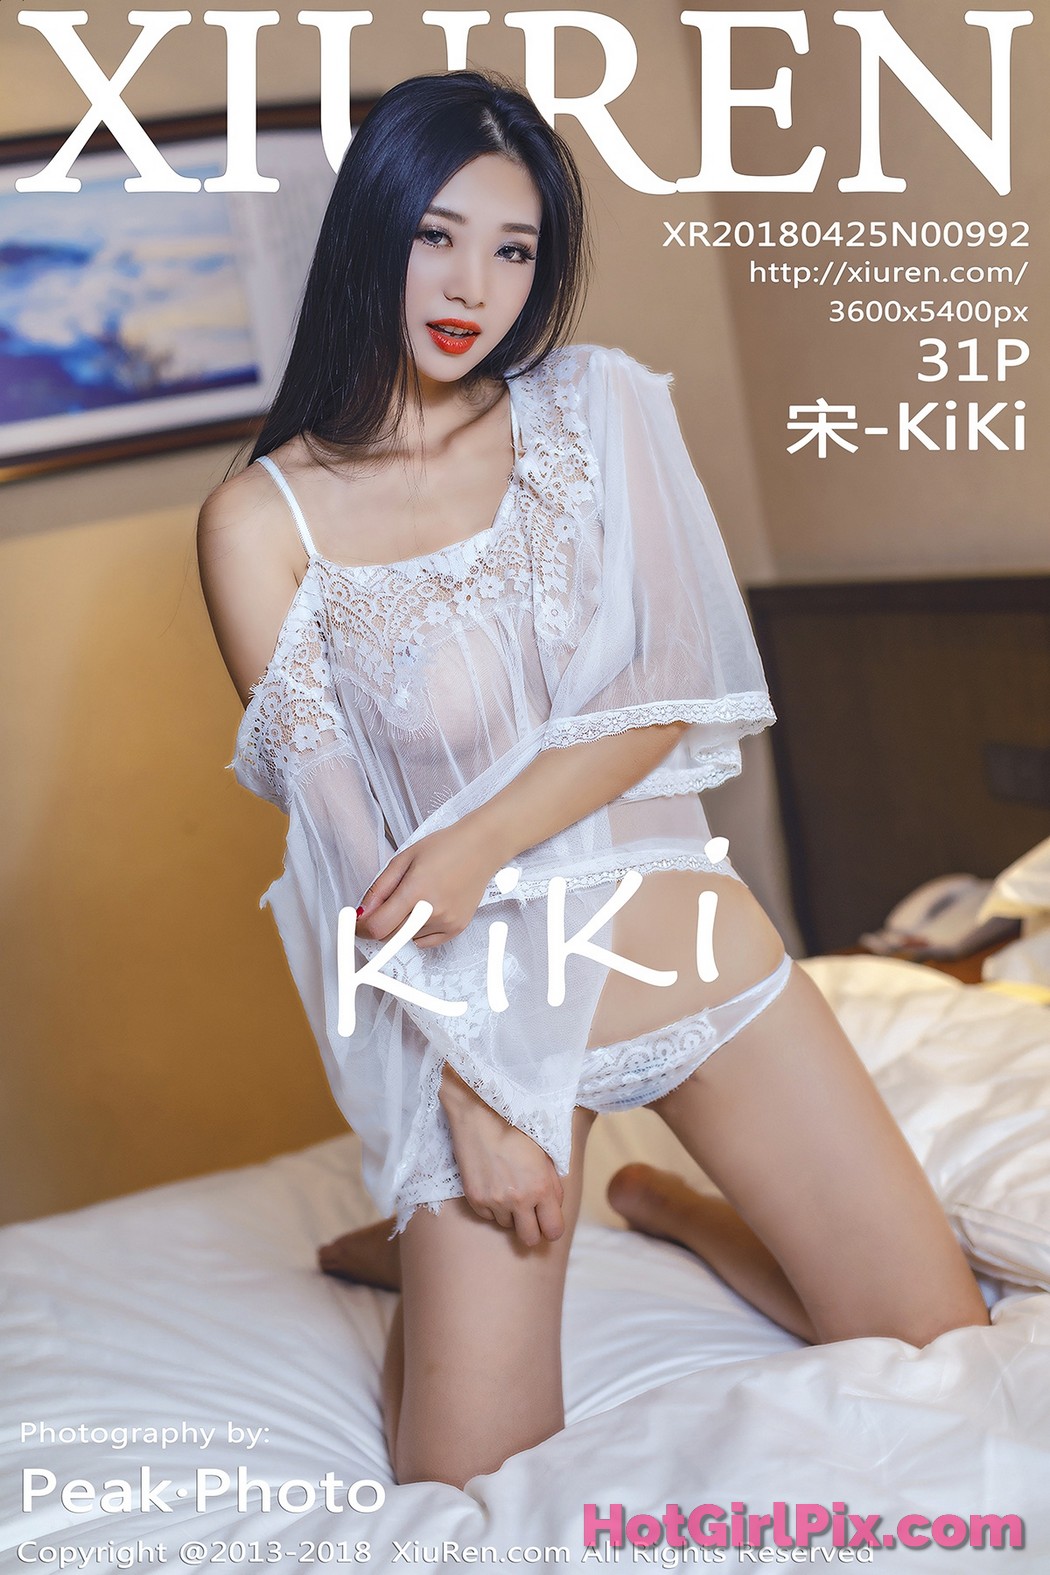 [XIUREN] No.992 宋-KiKi Cover Photo